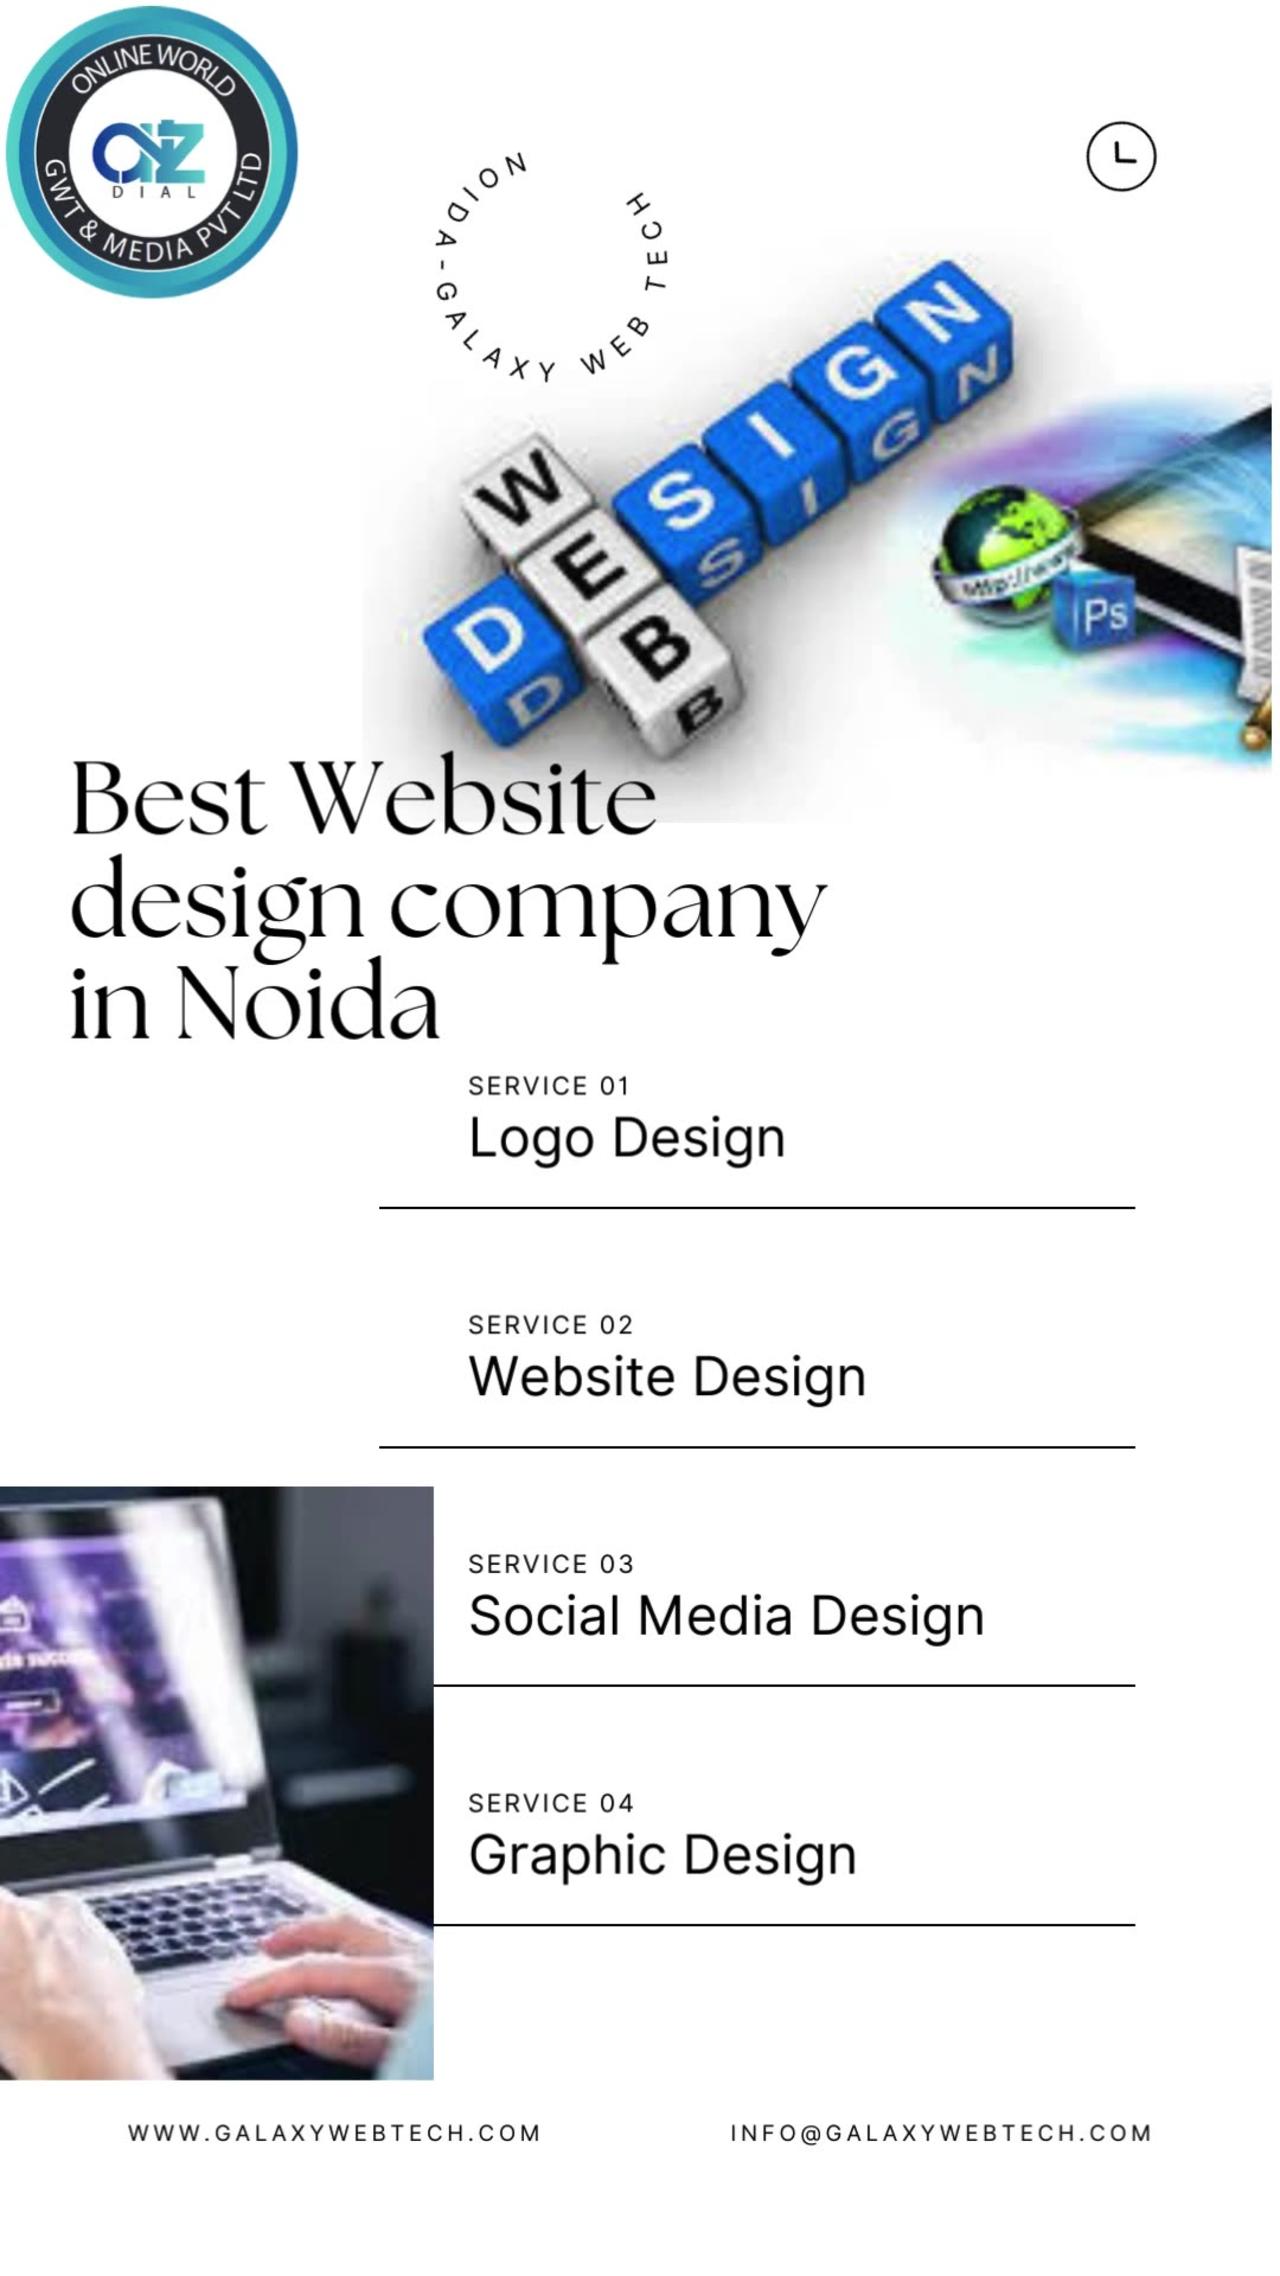 The Best Website design company in Noida-Galaxy Web Tech